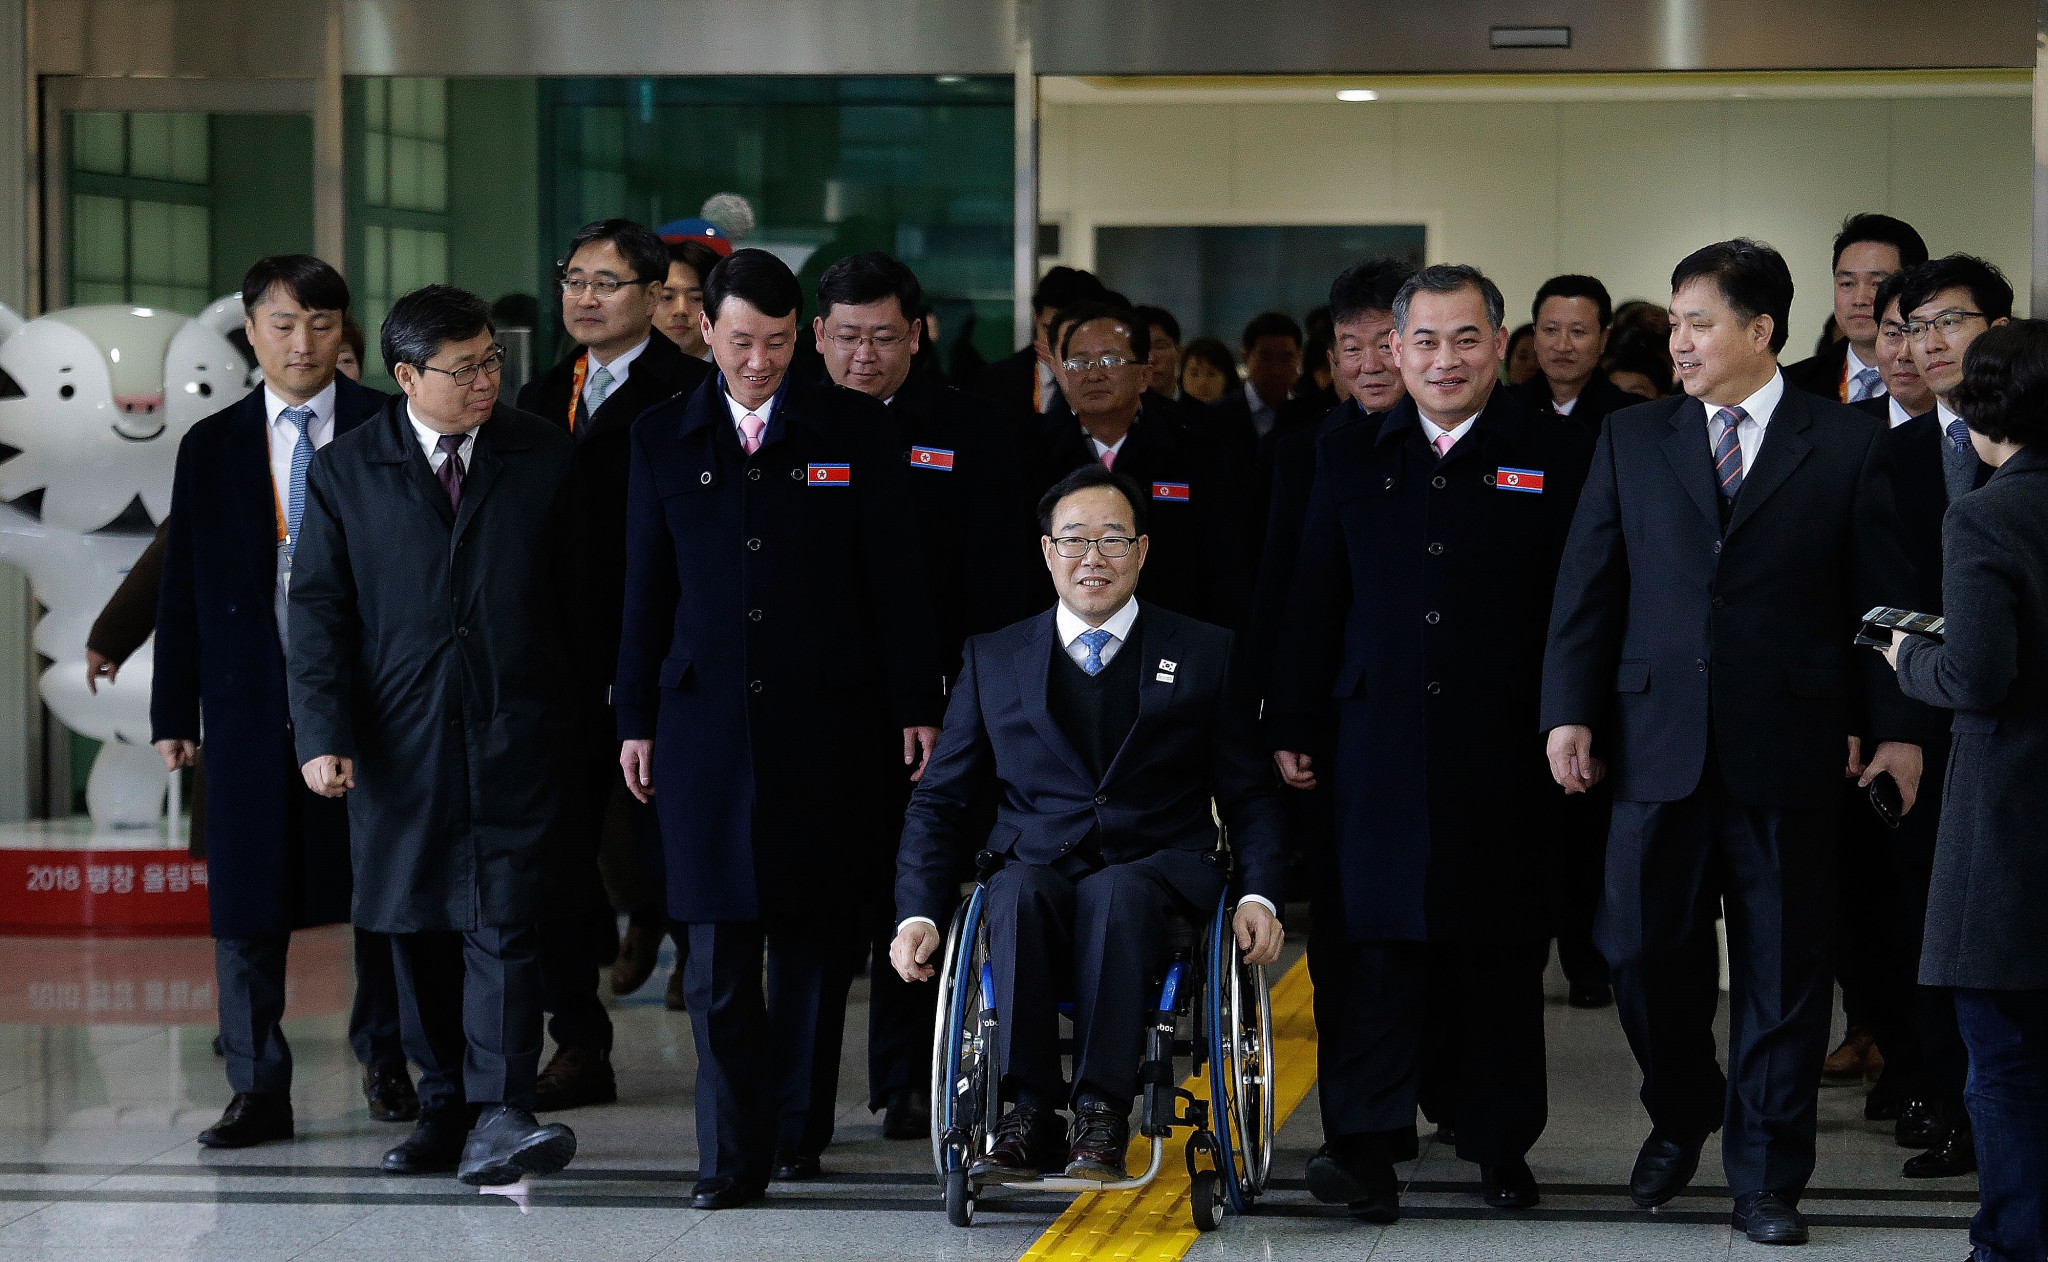 North Korean delegation arrives in South Korea for Pyeongchang 2018 Winter Paralympics